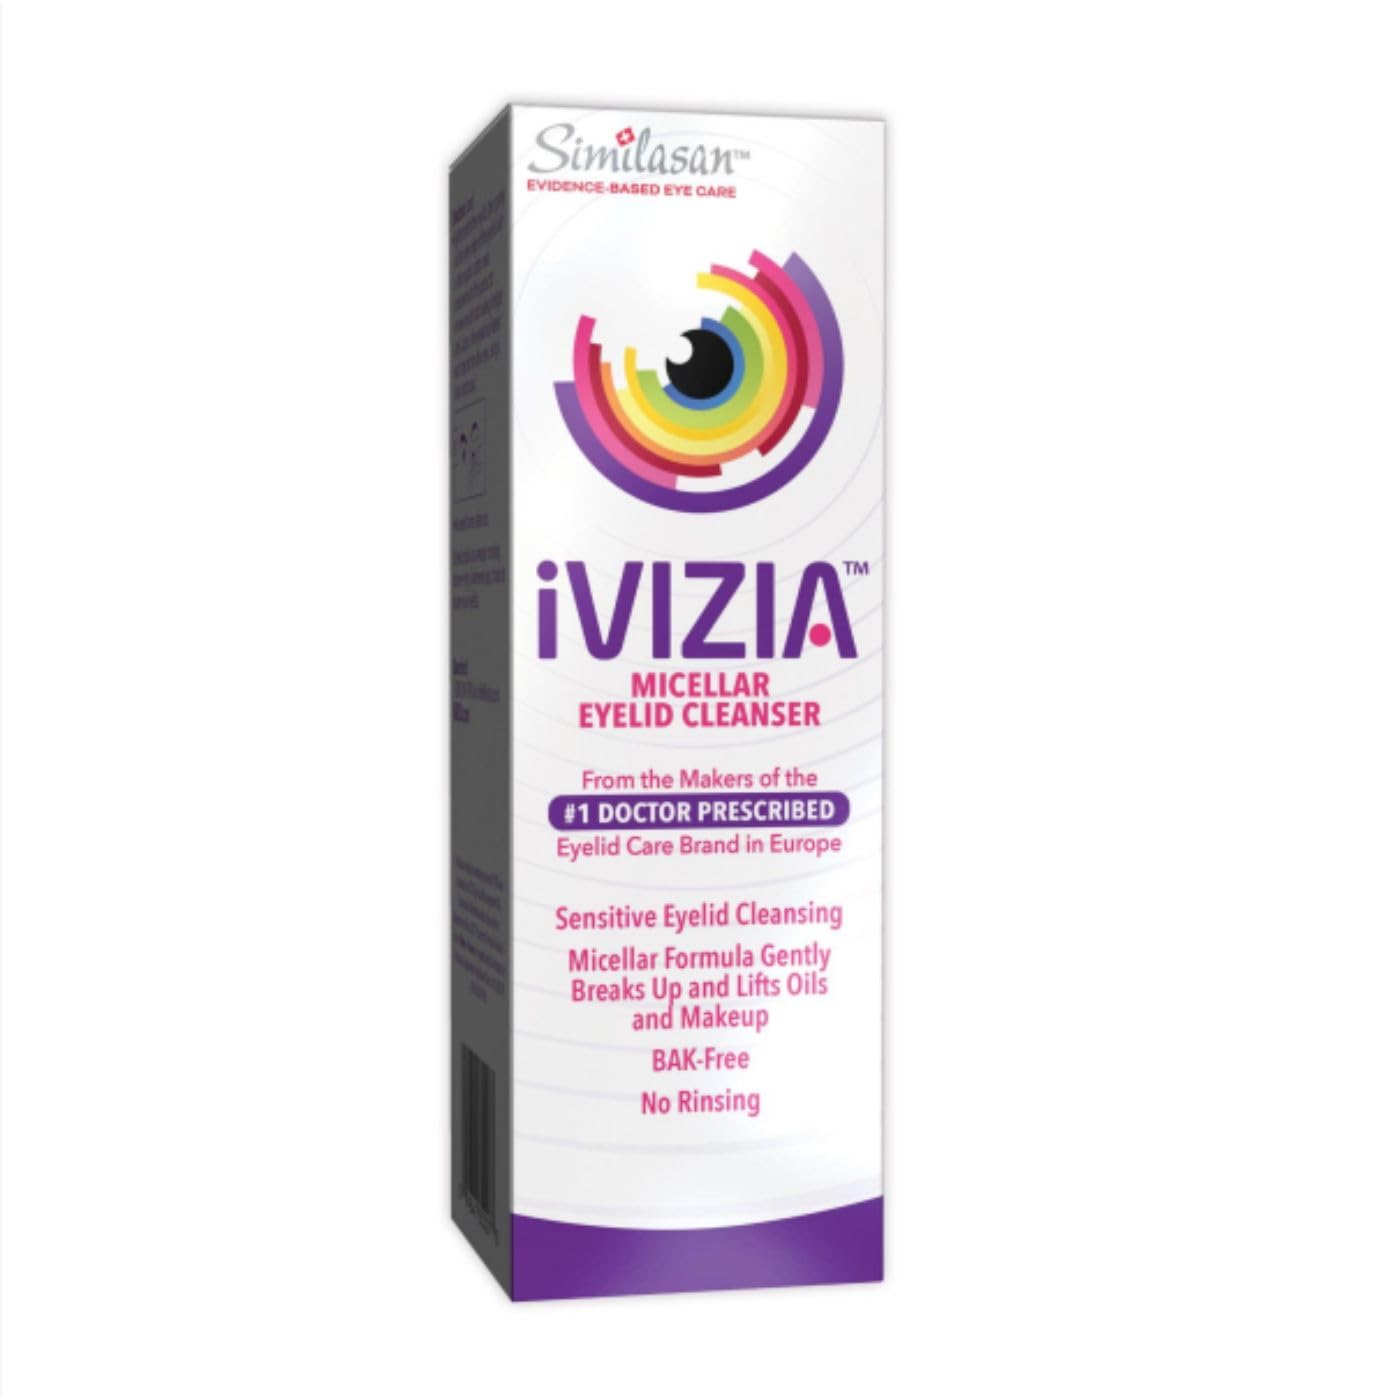 iVIZIA Micellar Eyelid Cleanser for Sensitive Eyelid Cleansing, BAK-Preservative-Free, Rinse-Free, Gently Removes Makeup, 3.3fl oz Bottle